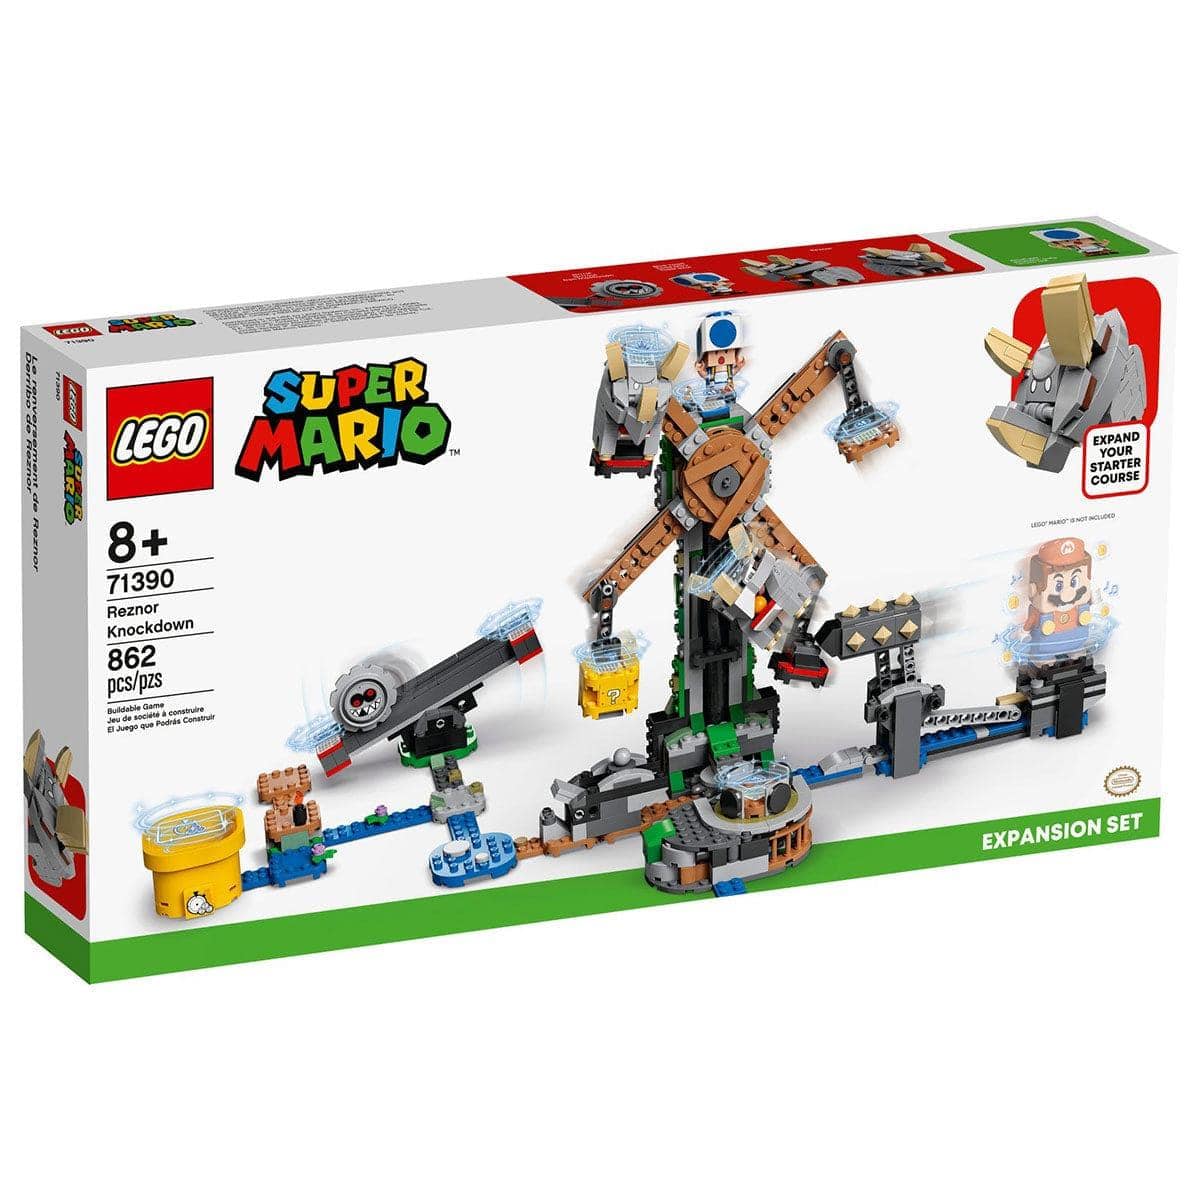 LEGO JOUET K.I.D. INC Toys & Games LEGO Super Mario Reznor Knockdown Expansion Set, 71390, Ages 8+